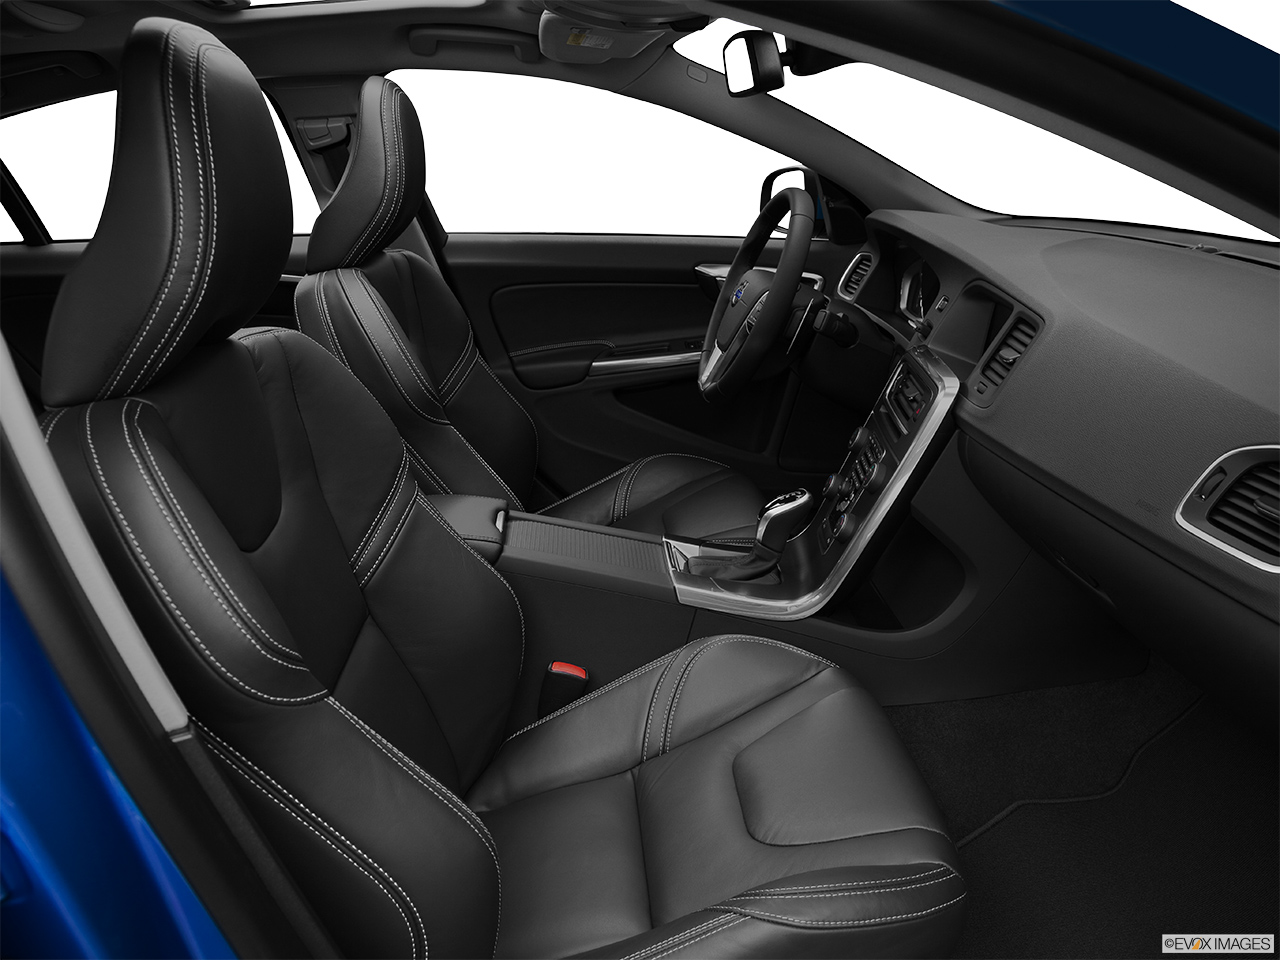 2014 Volvo S60 T5 FWD Premier Plus Passenger seat. 